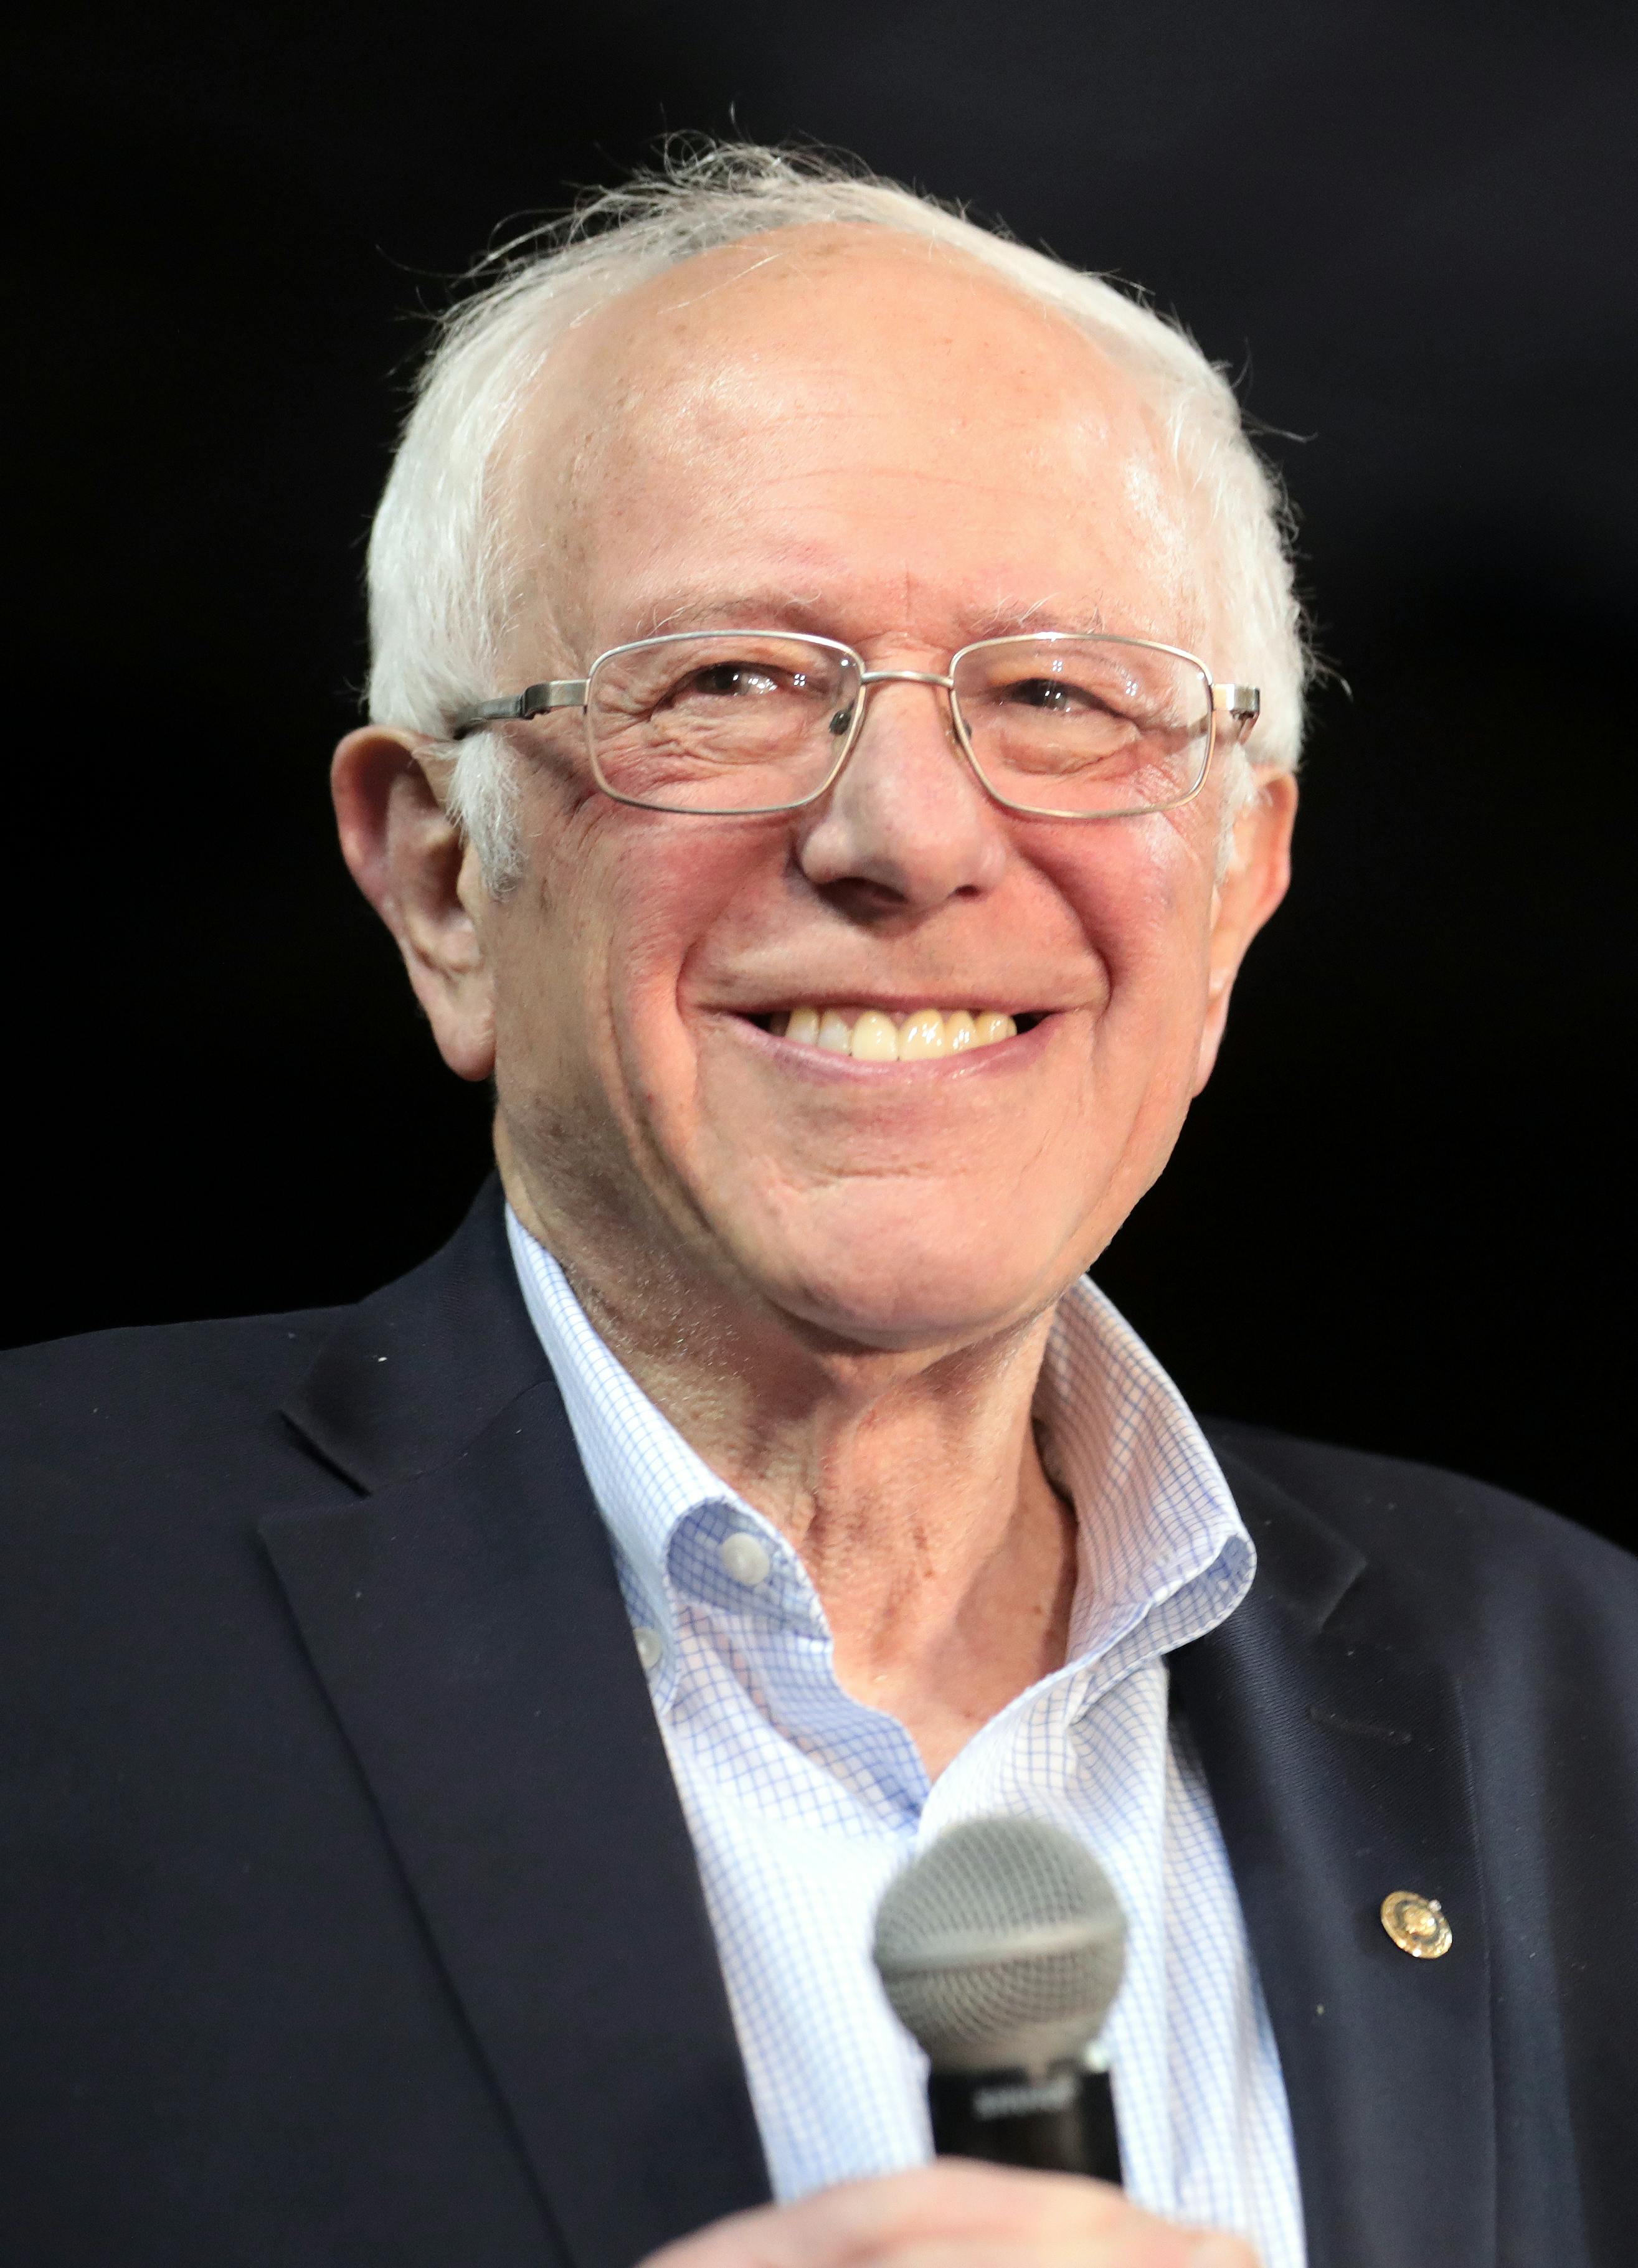 profile picture of Bernie Sanders